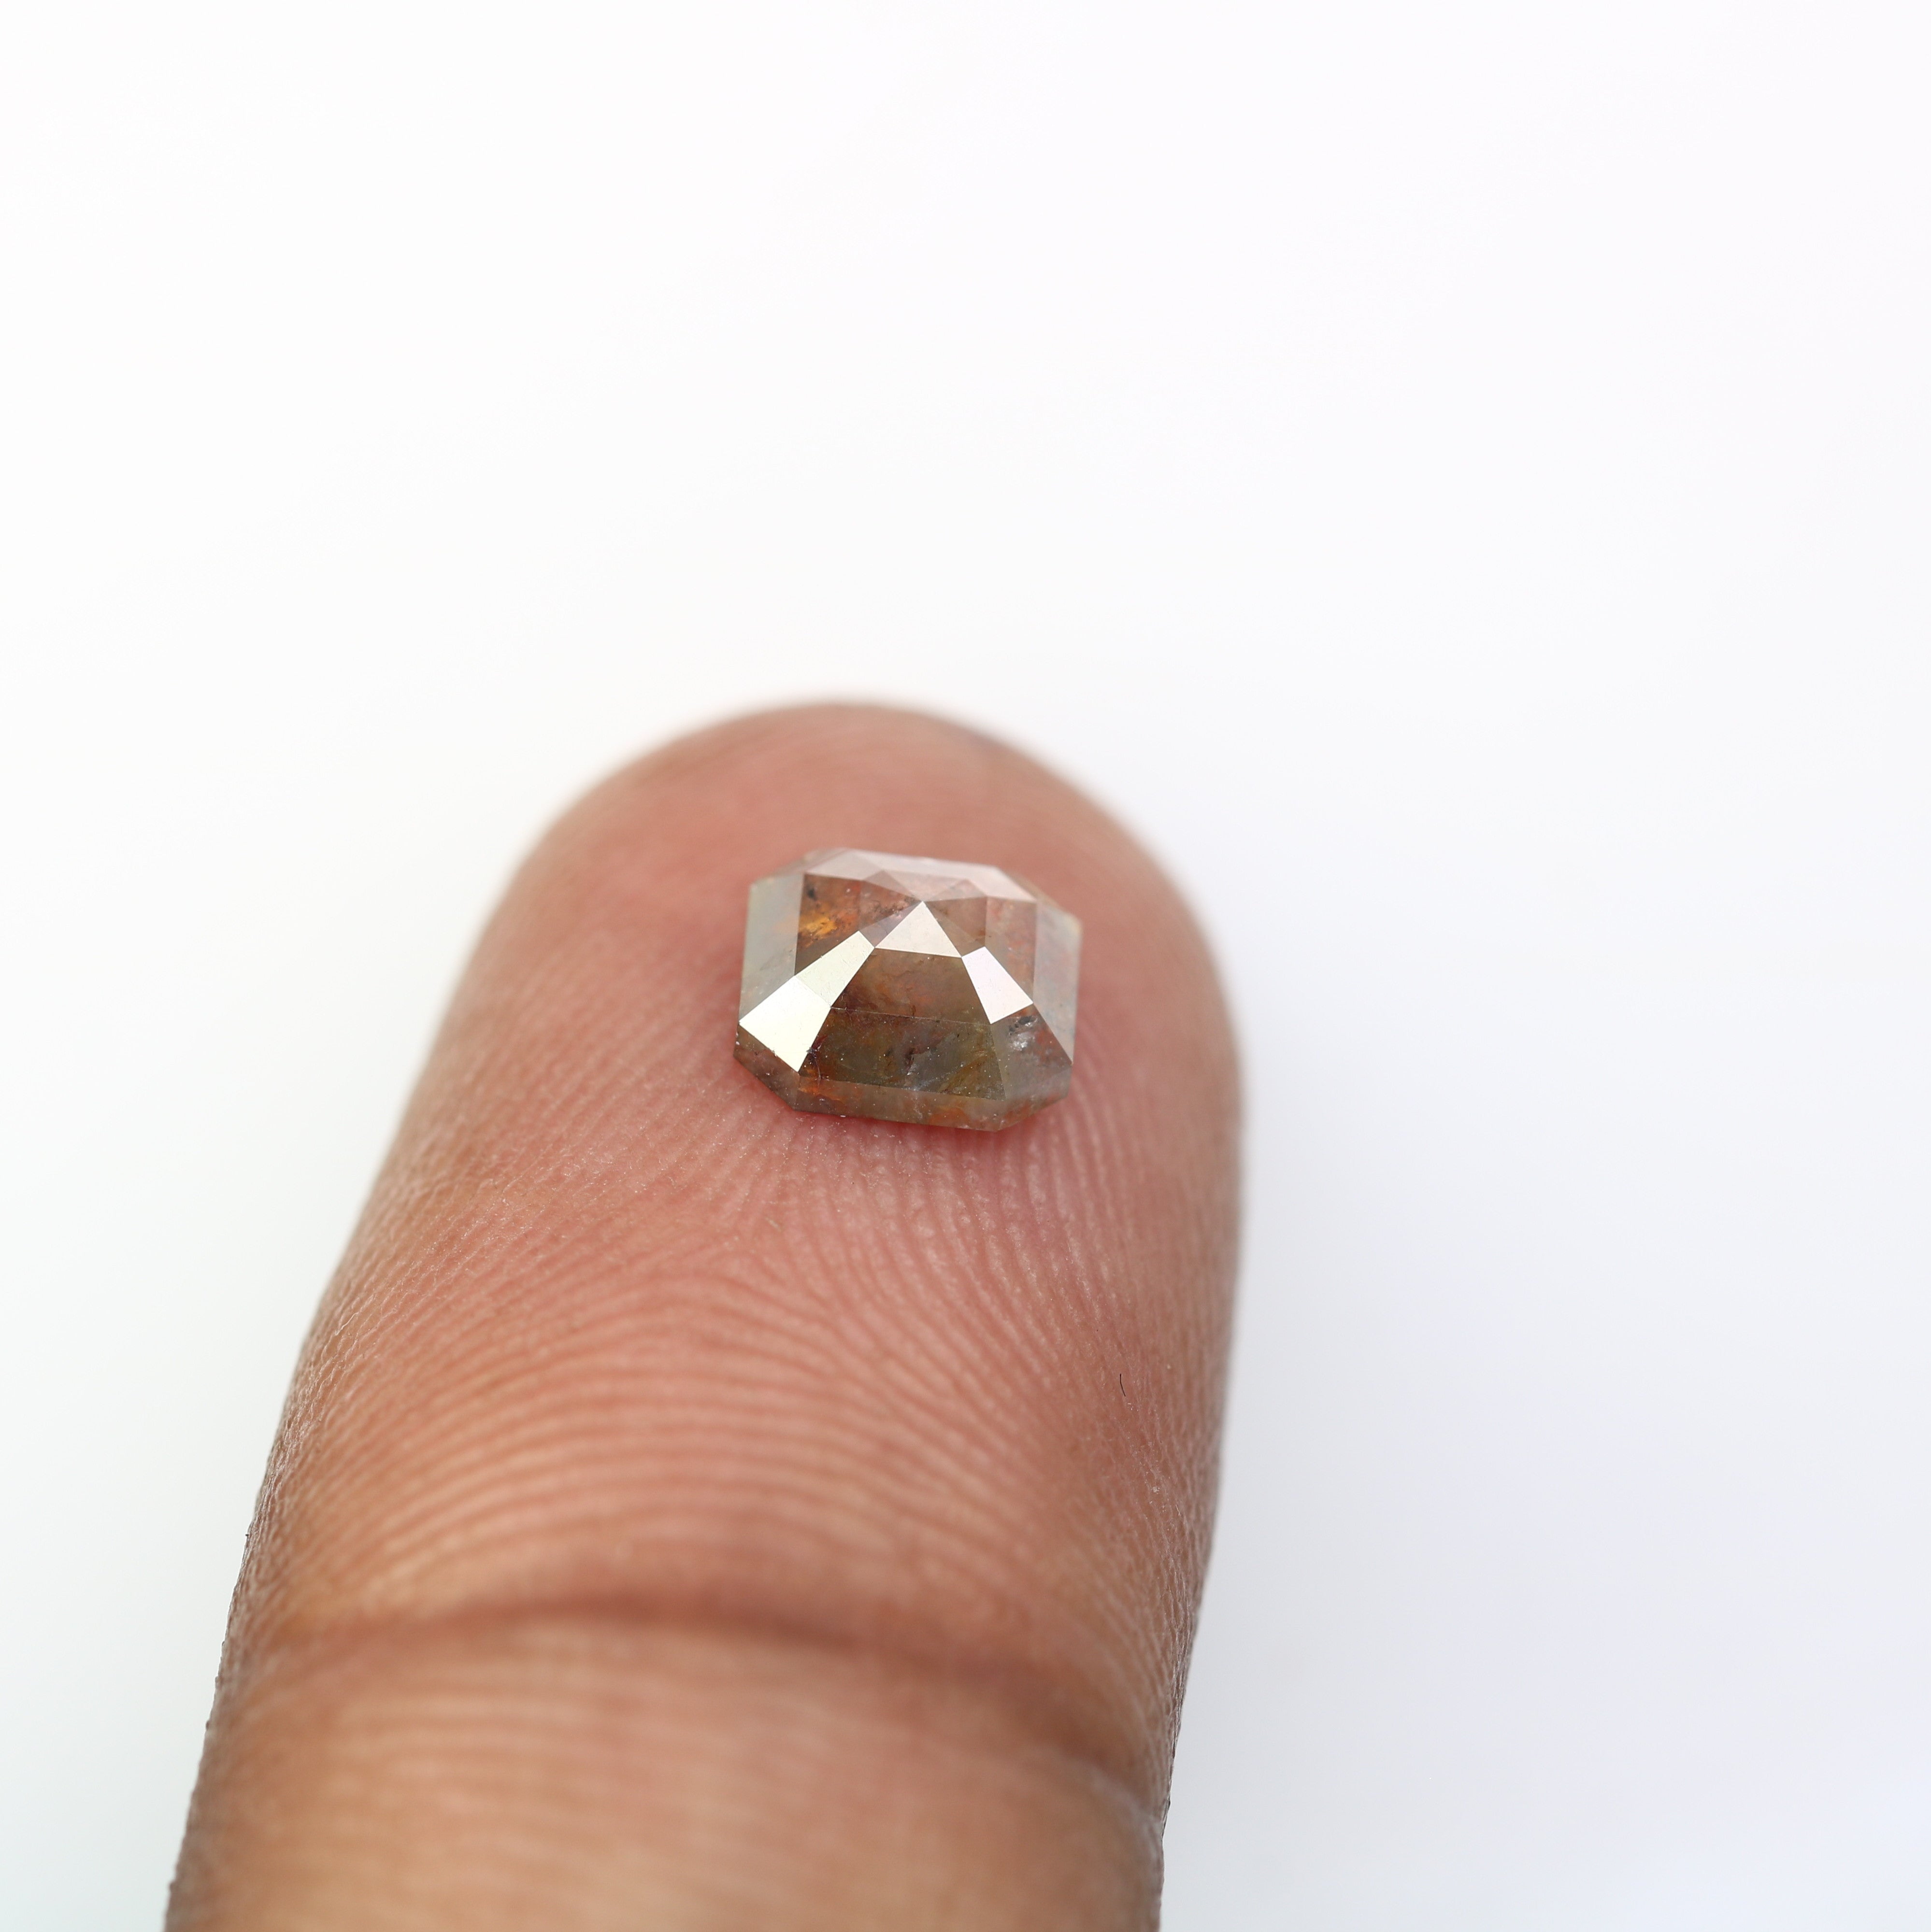 Asscher Shaped Diamond Ring 1.19 Carat Natural Brown Color Diamond